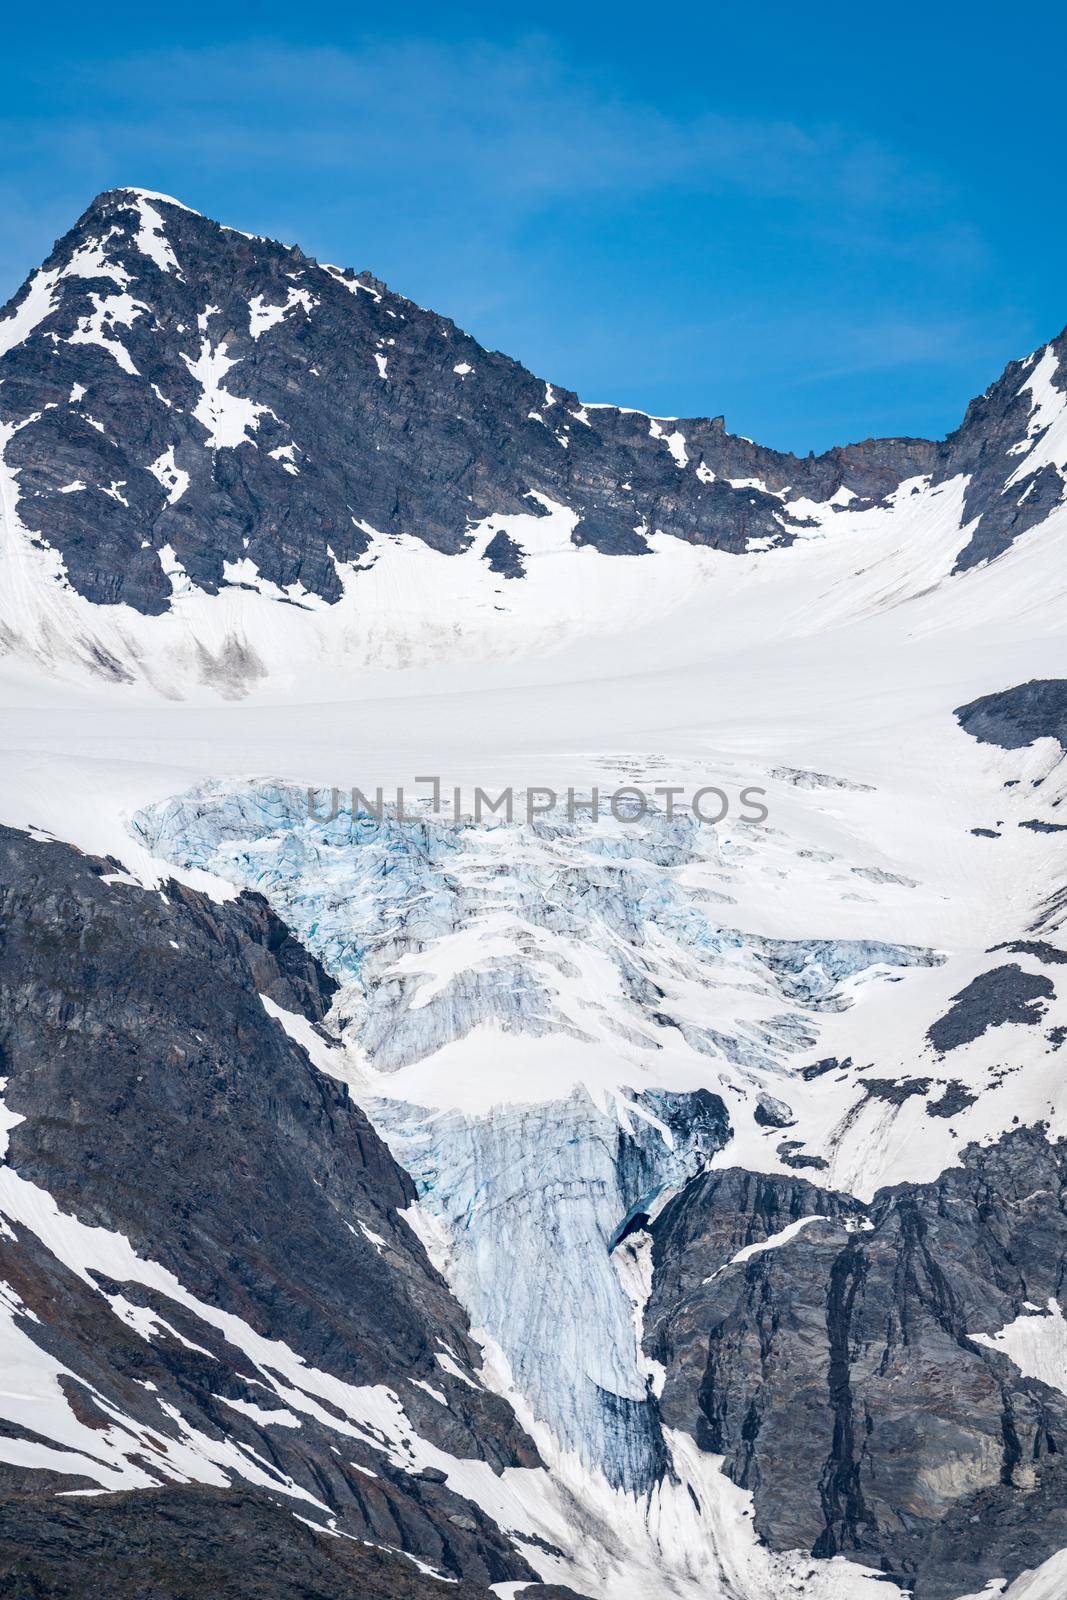 Edge of Worthington Glacier near Thompson Pass Alaska by steheap